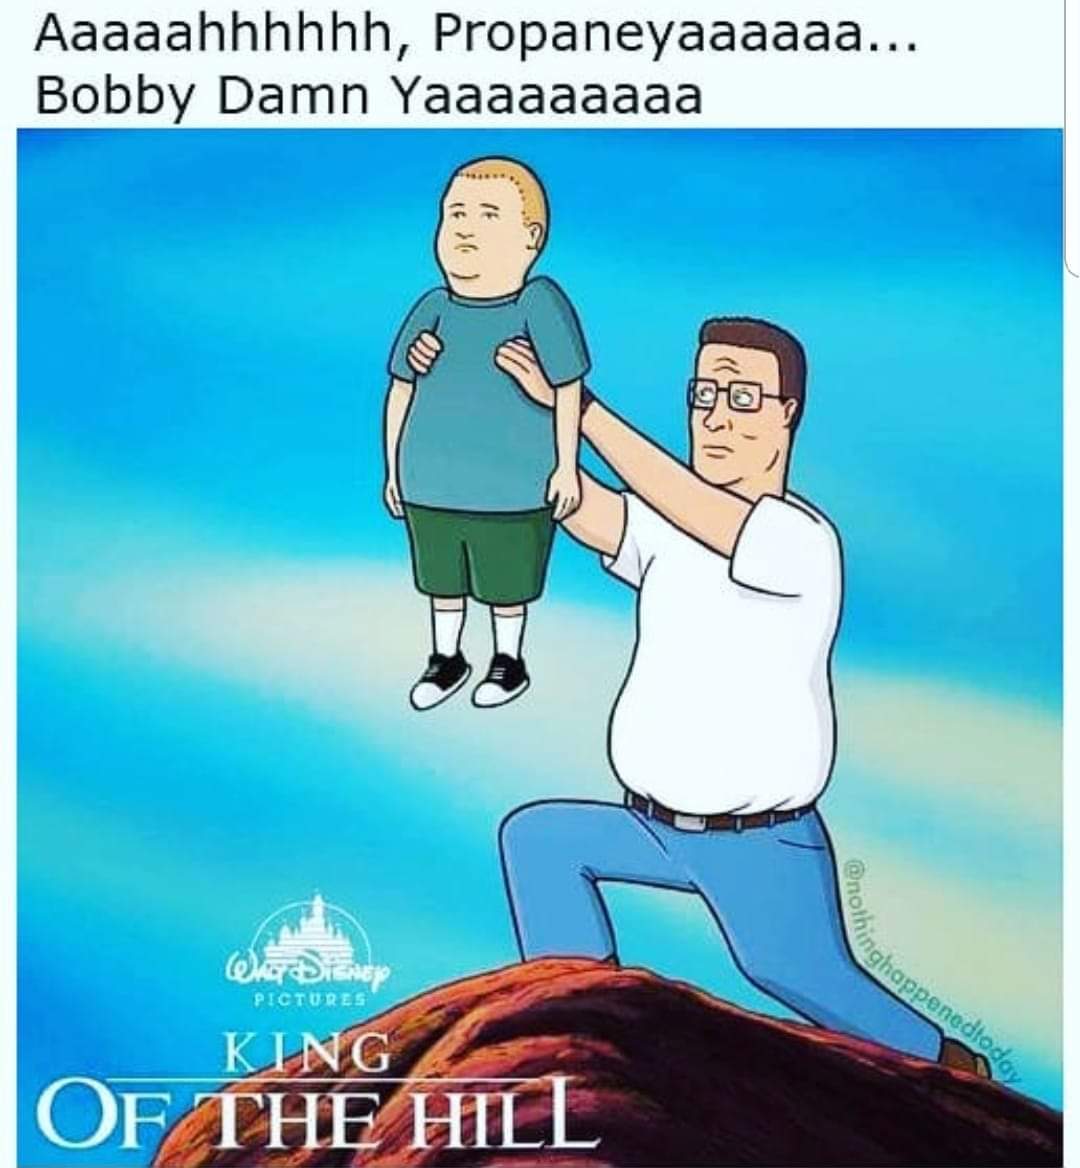 Dammit bobby - meme